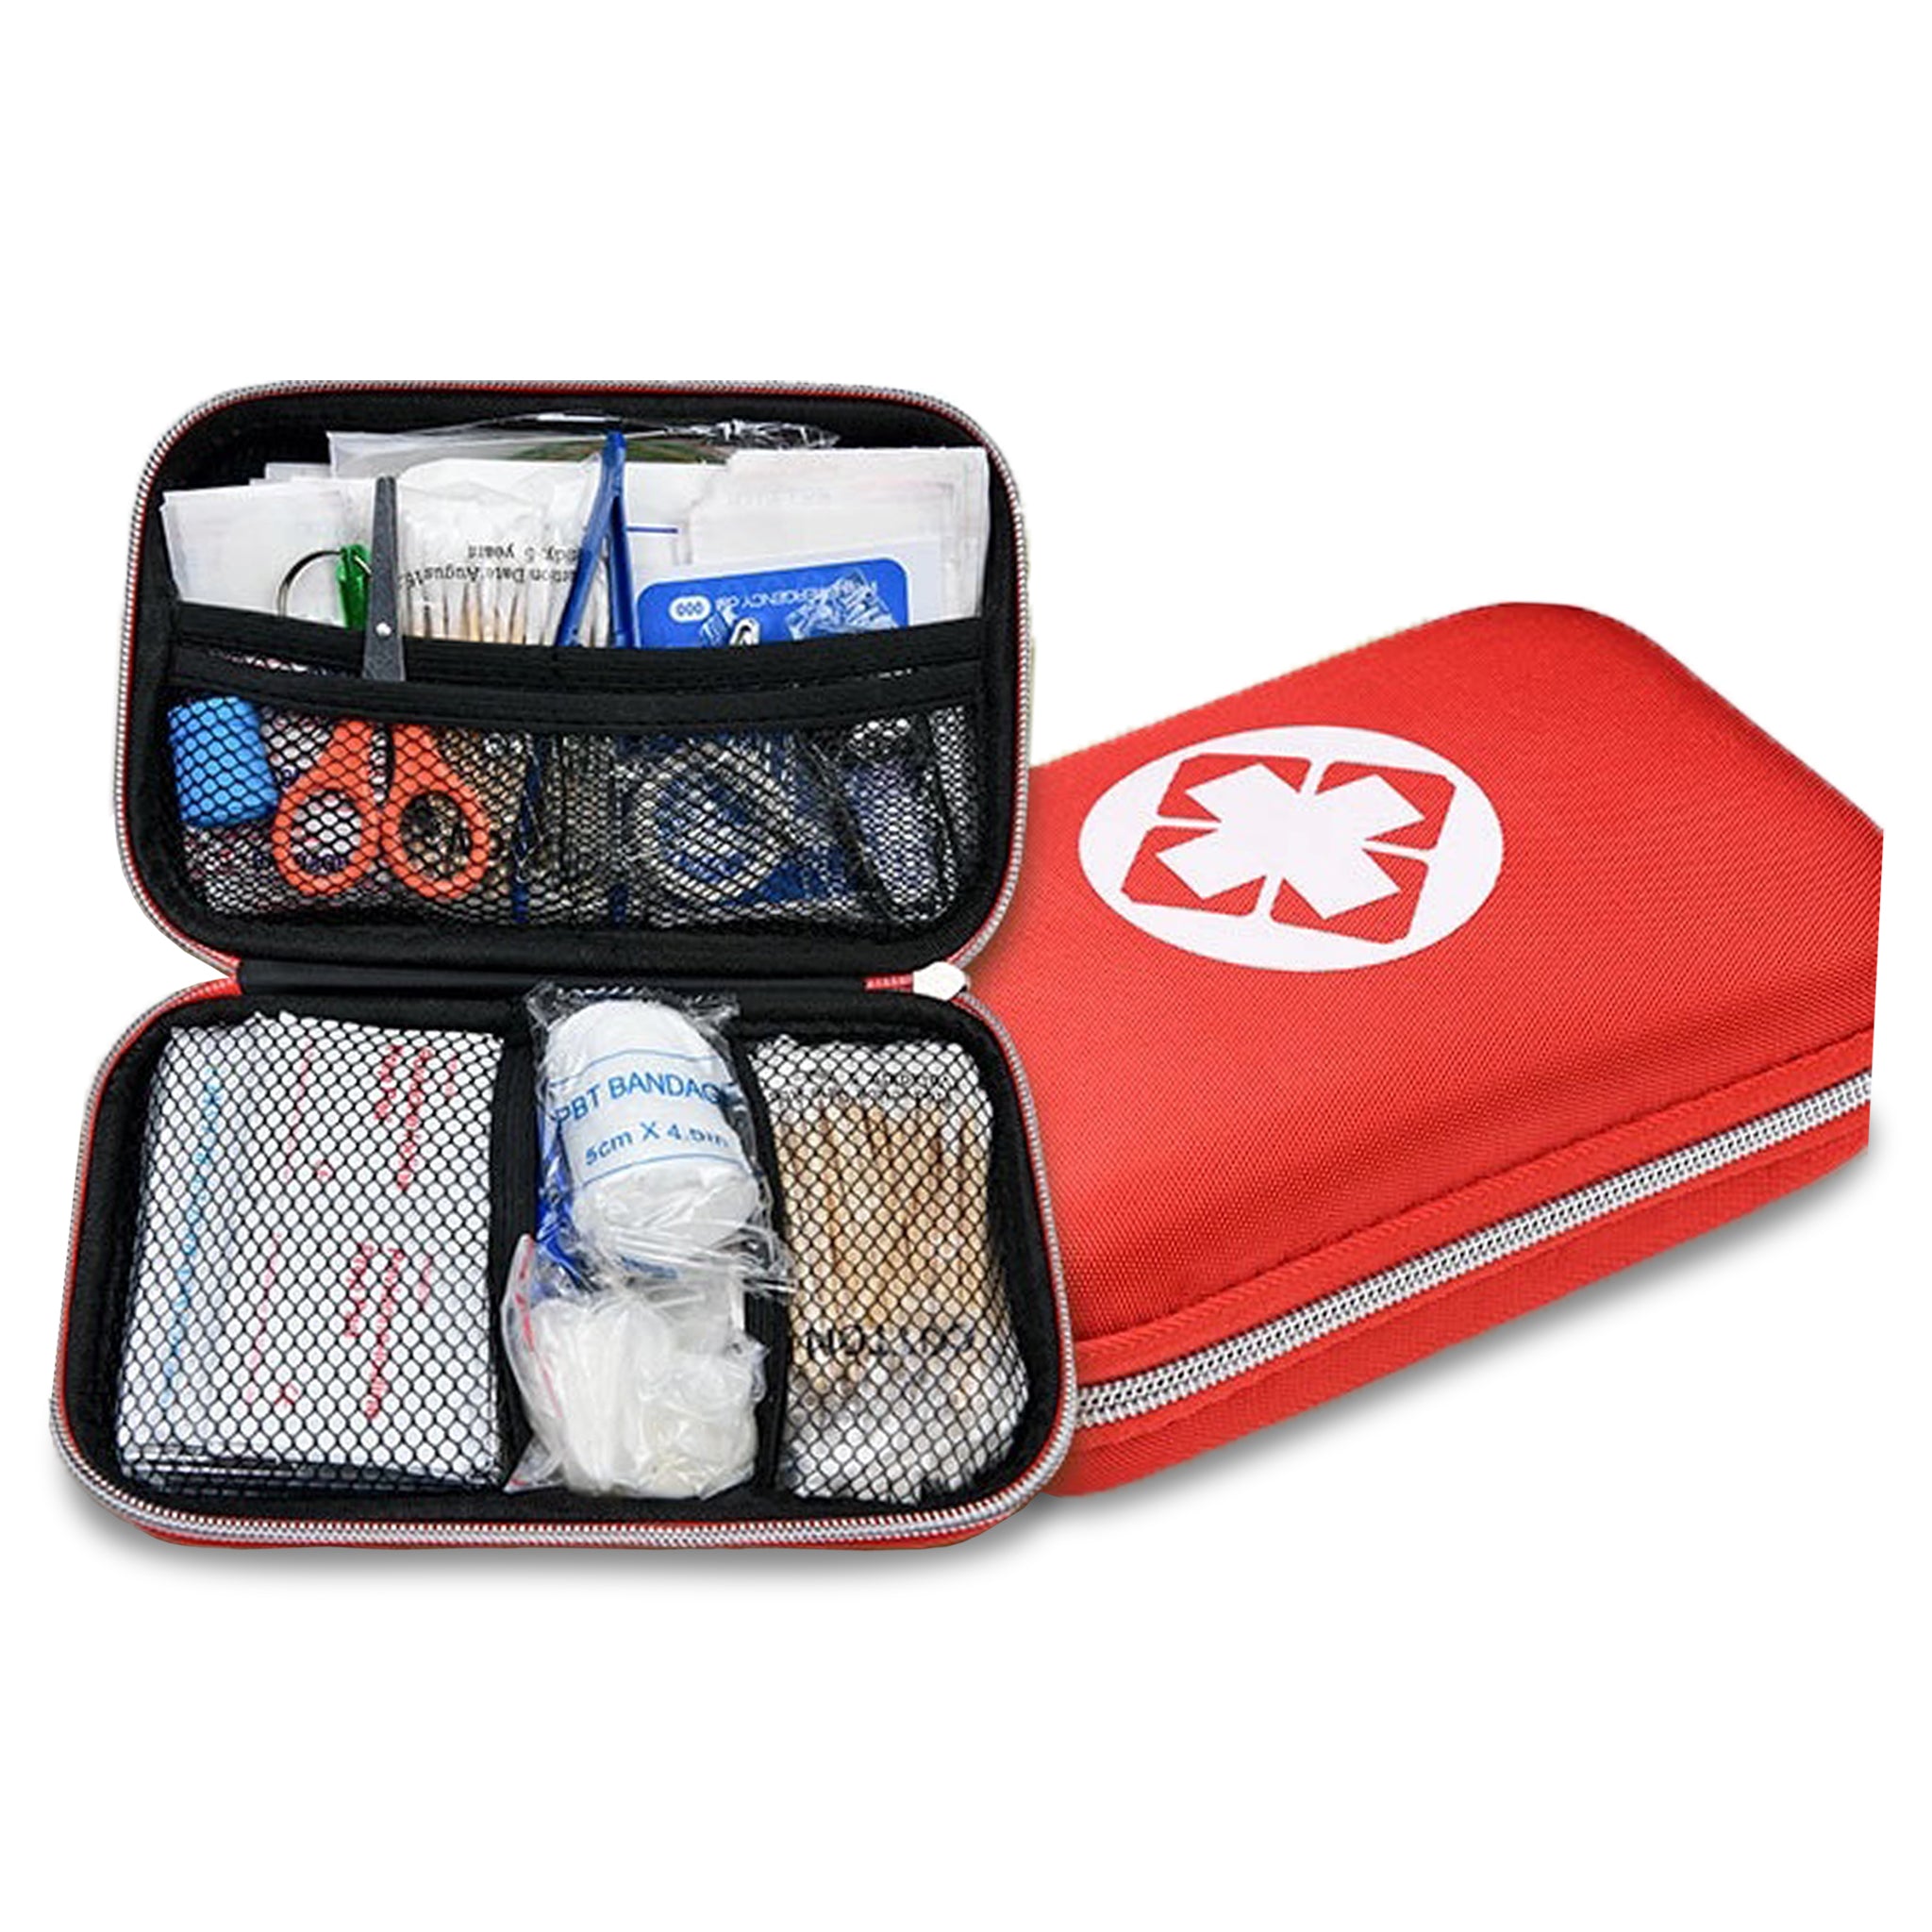 Survival, Preparedness, Disaster, First Aid, Emergency Bag/Kits